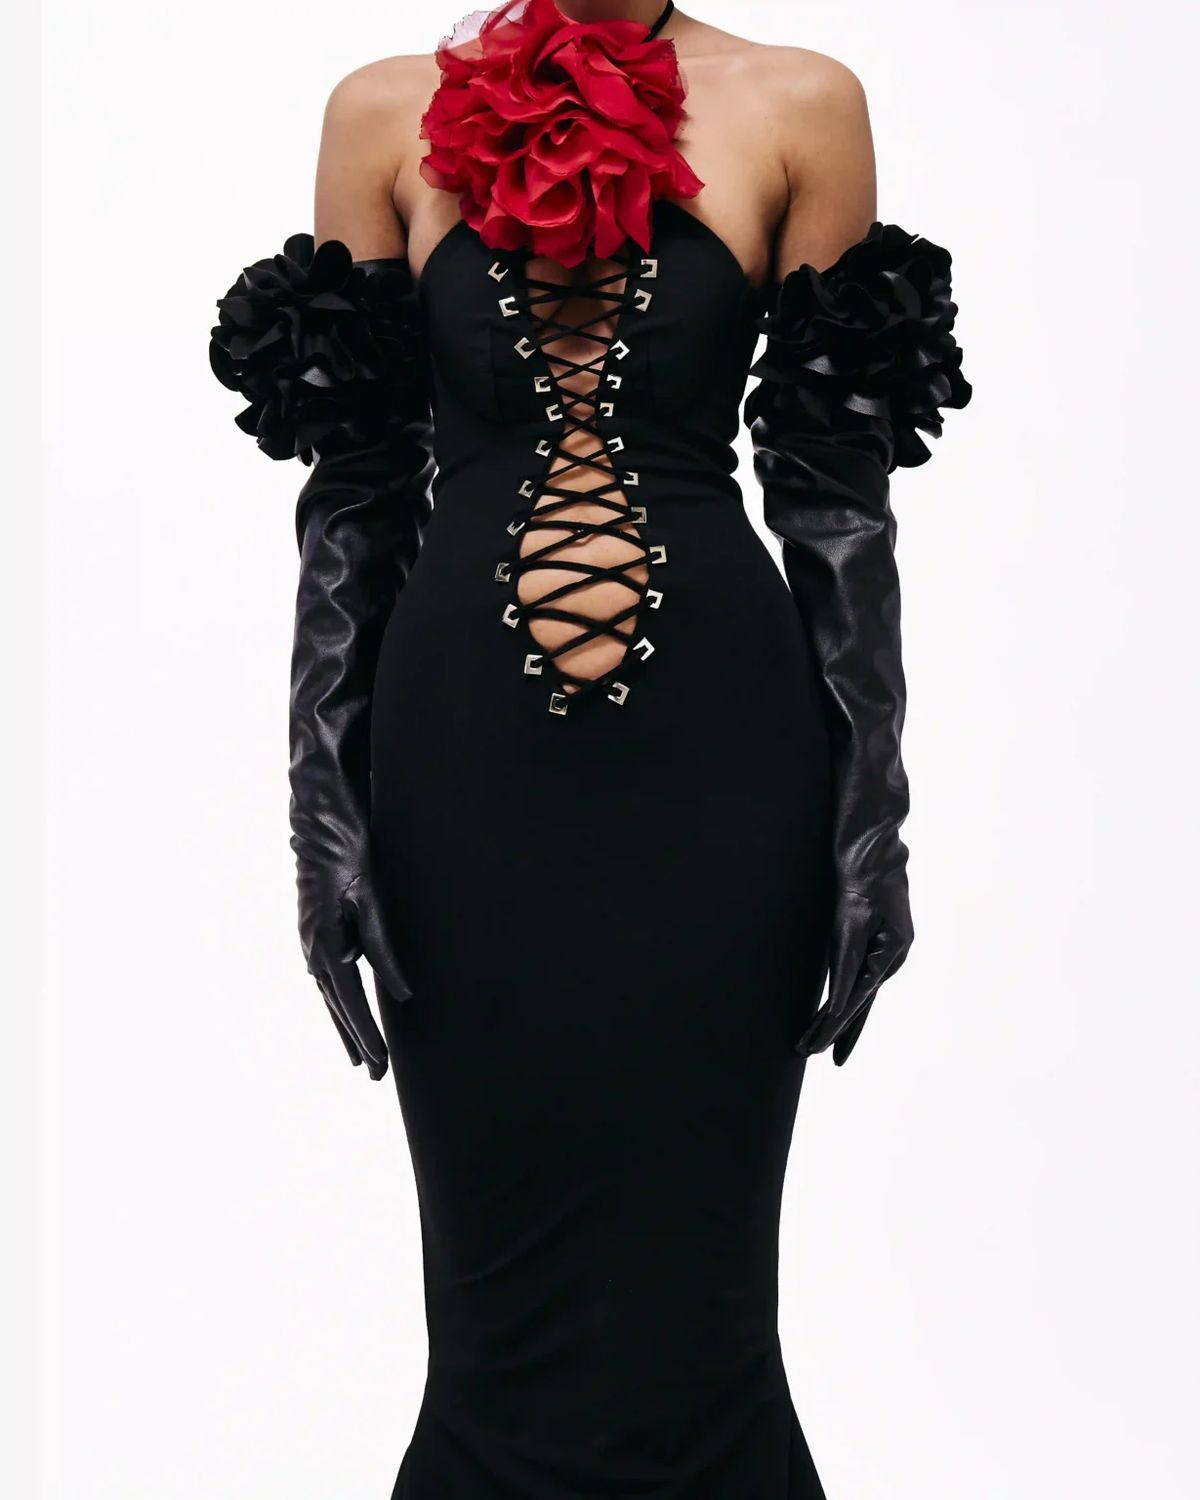 Style euphoria-24-10 Valdrin Sahiti Size L Pageant Black Mermaid Dress on Queenly